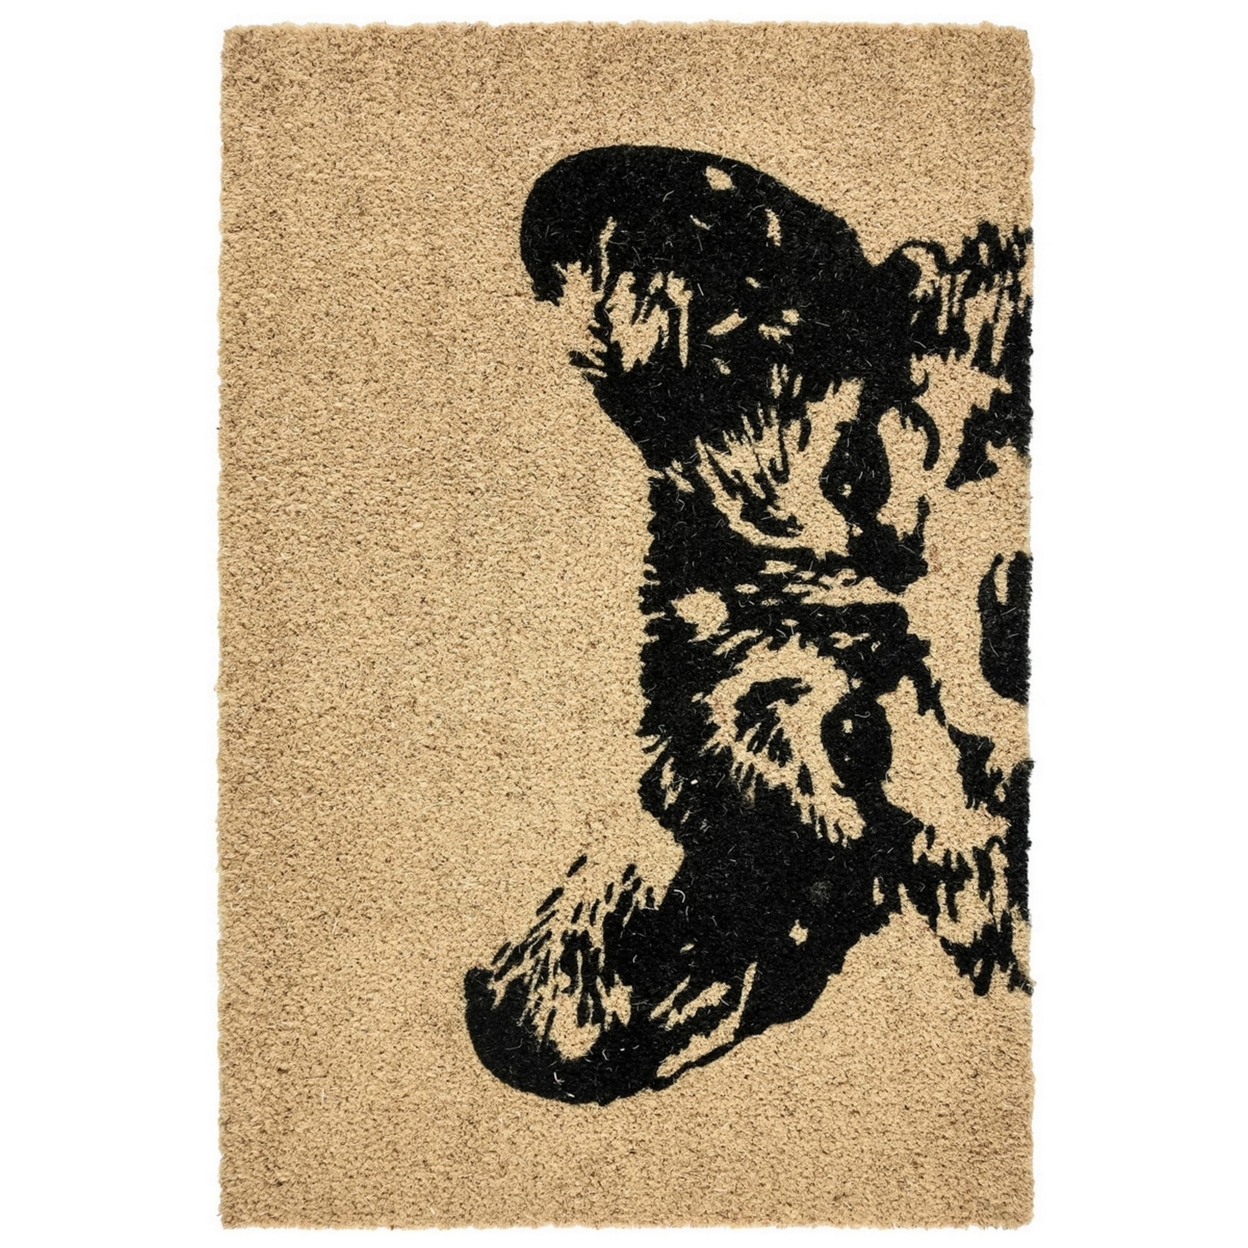 24 X 36 Machine Made Coir Doormat, Black Dog Print Design, Ivory Base - Saltoro Sherpi